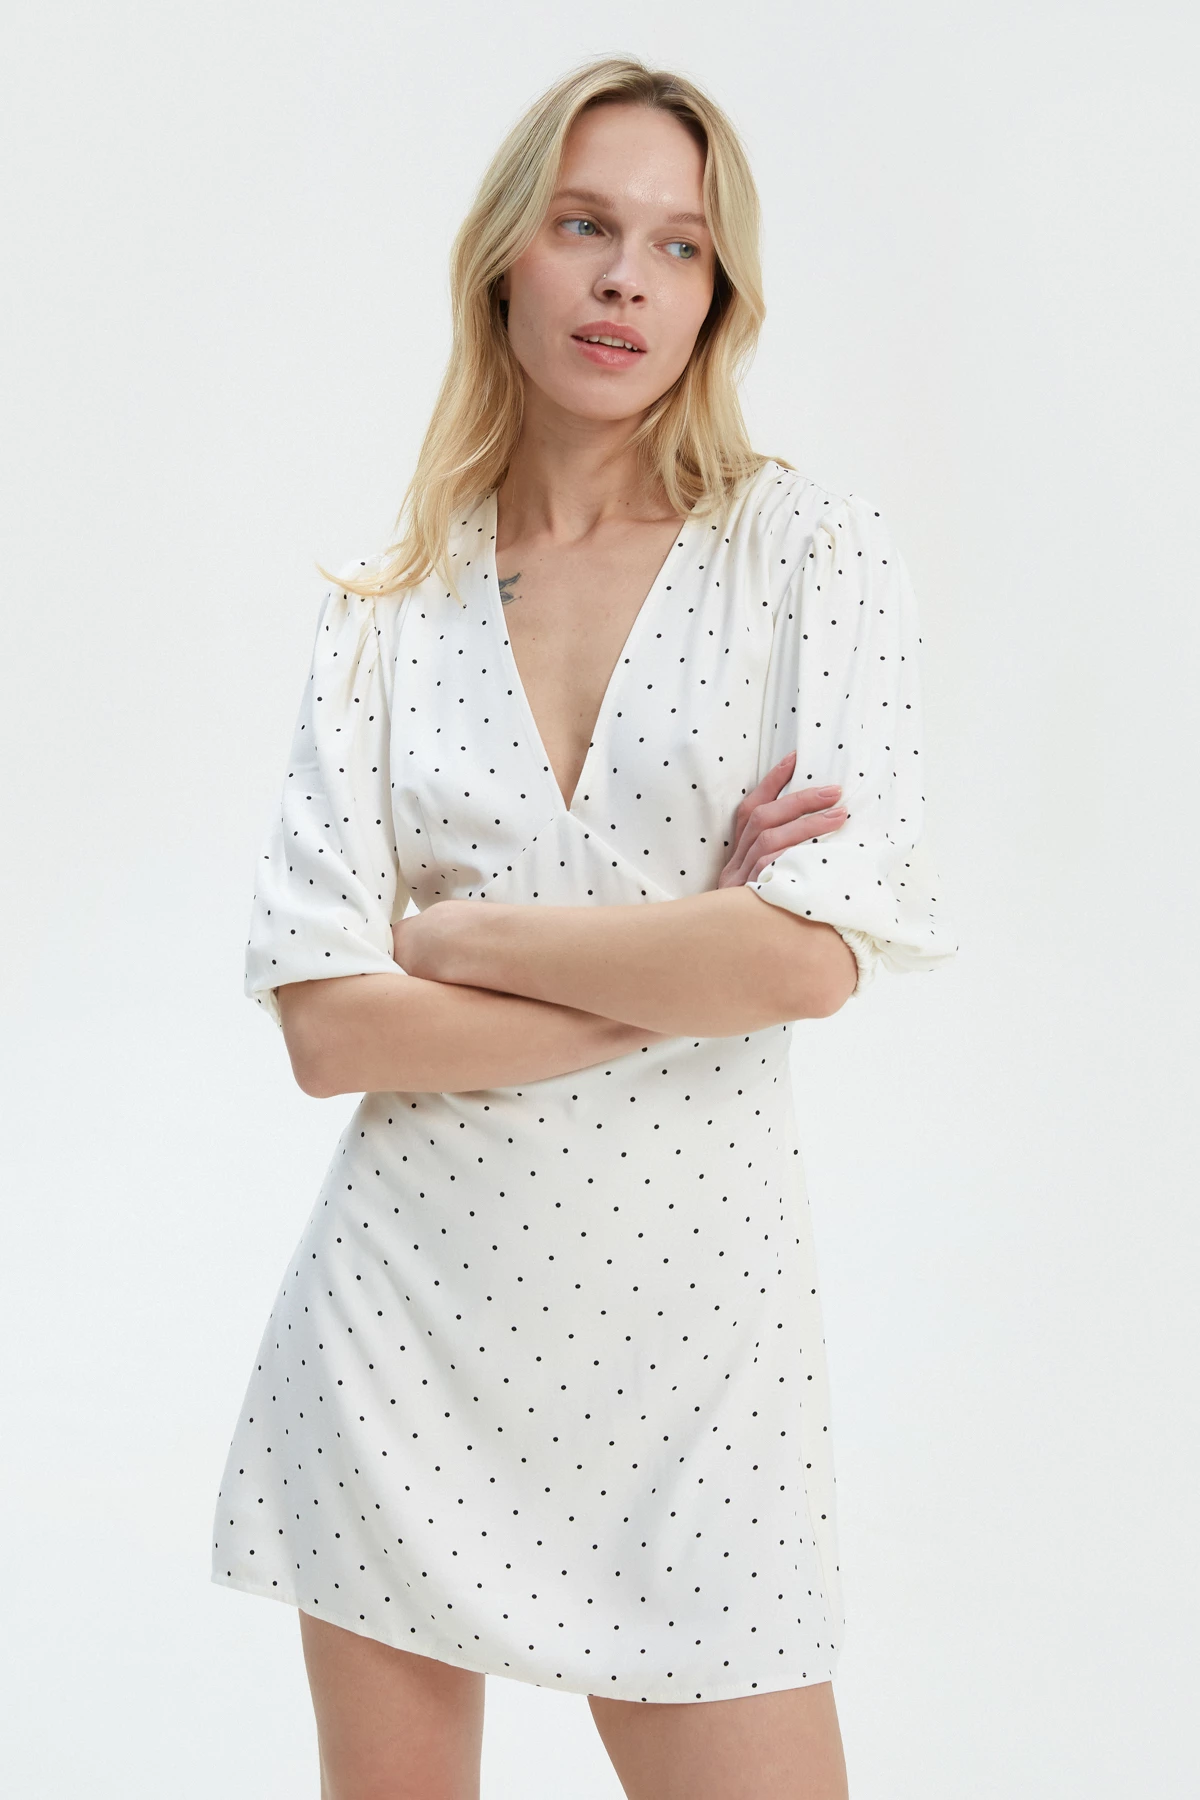 Milky viscose short dress with polka dot print, photo 3